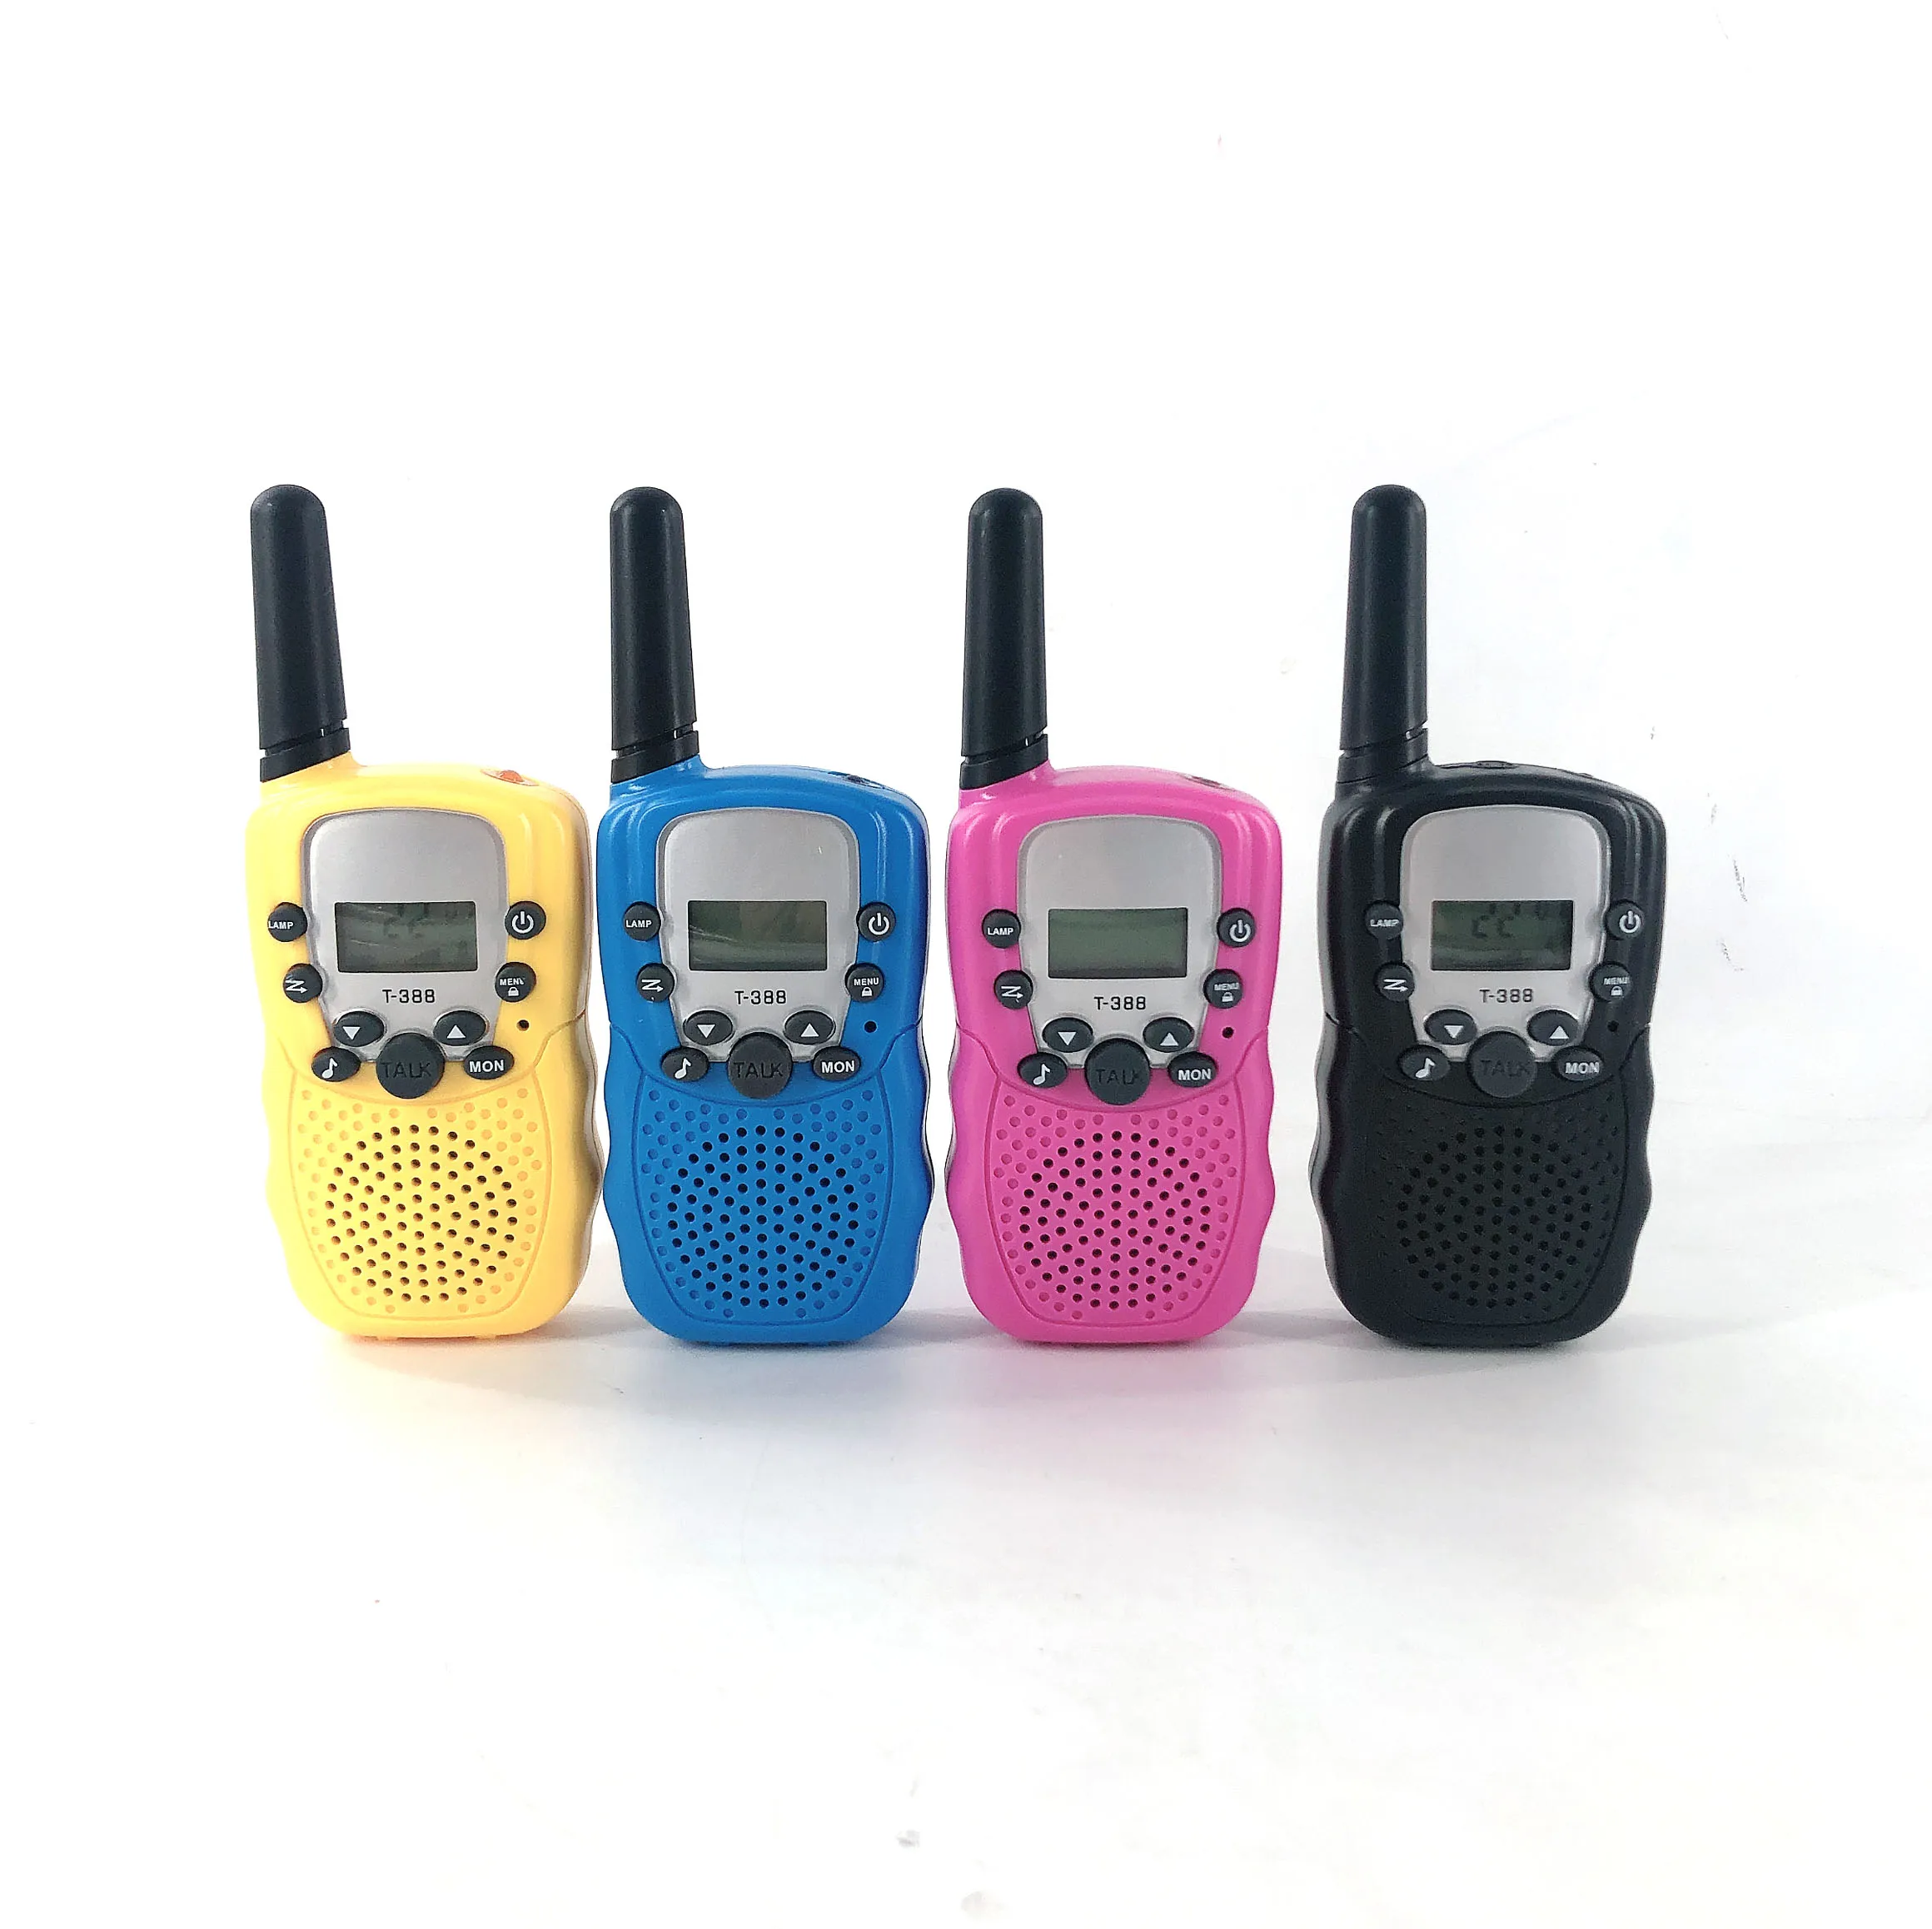 

Travel Walkie Talkie Walkie Talkies for Kids Toys 22 Channels 2 Way Radio Toy 3 KM Long Range with Backlit LCD Flashlight, Black yellow blue pink